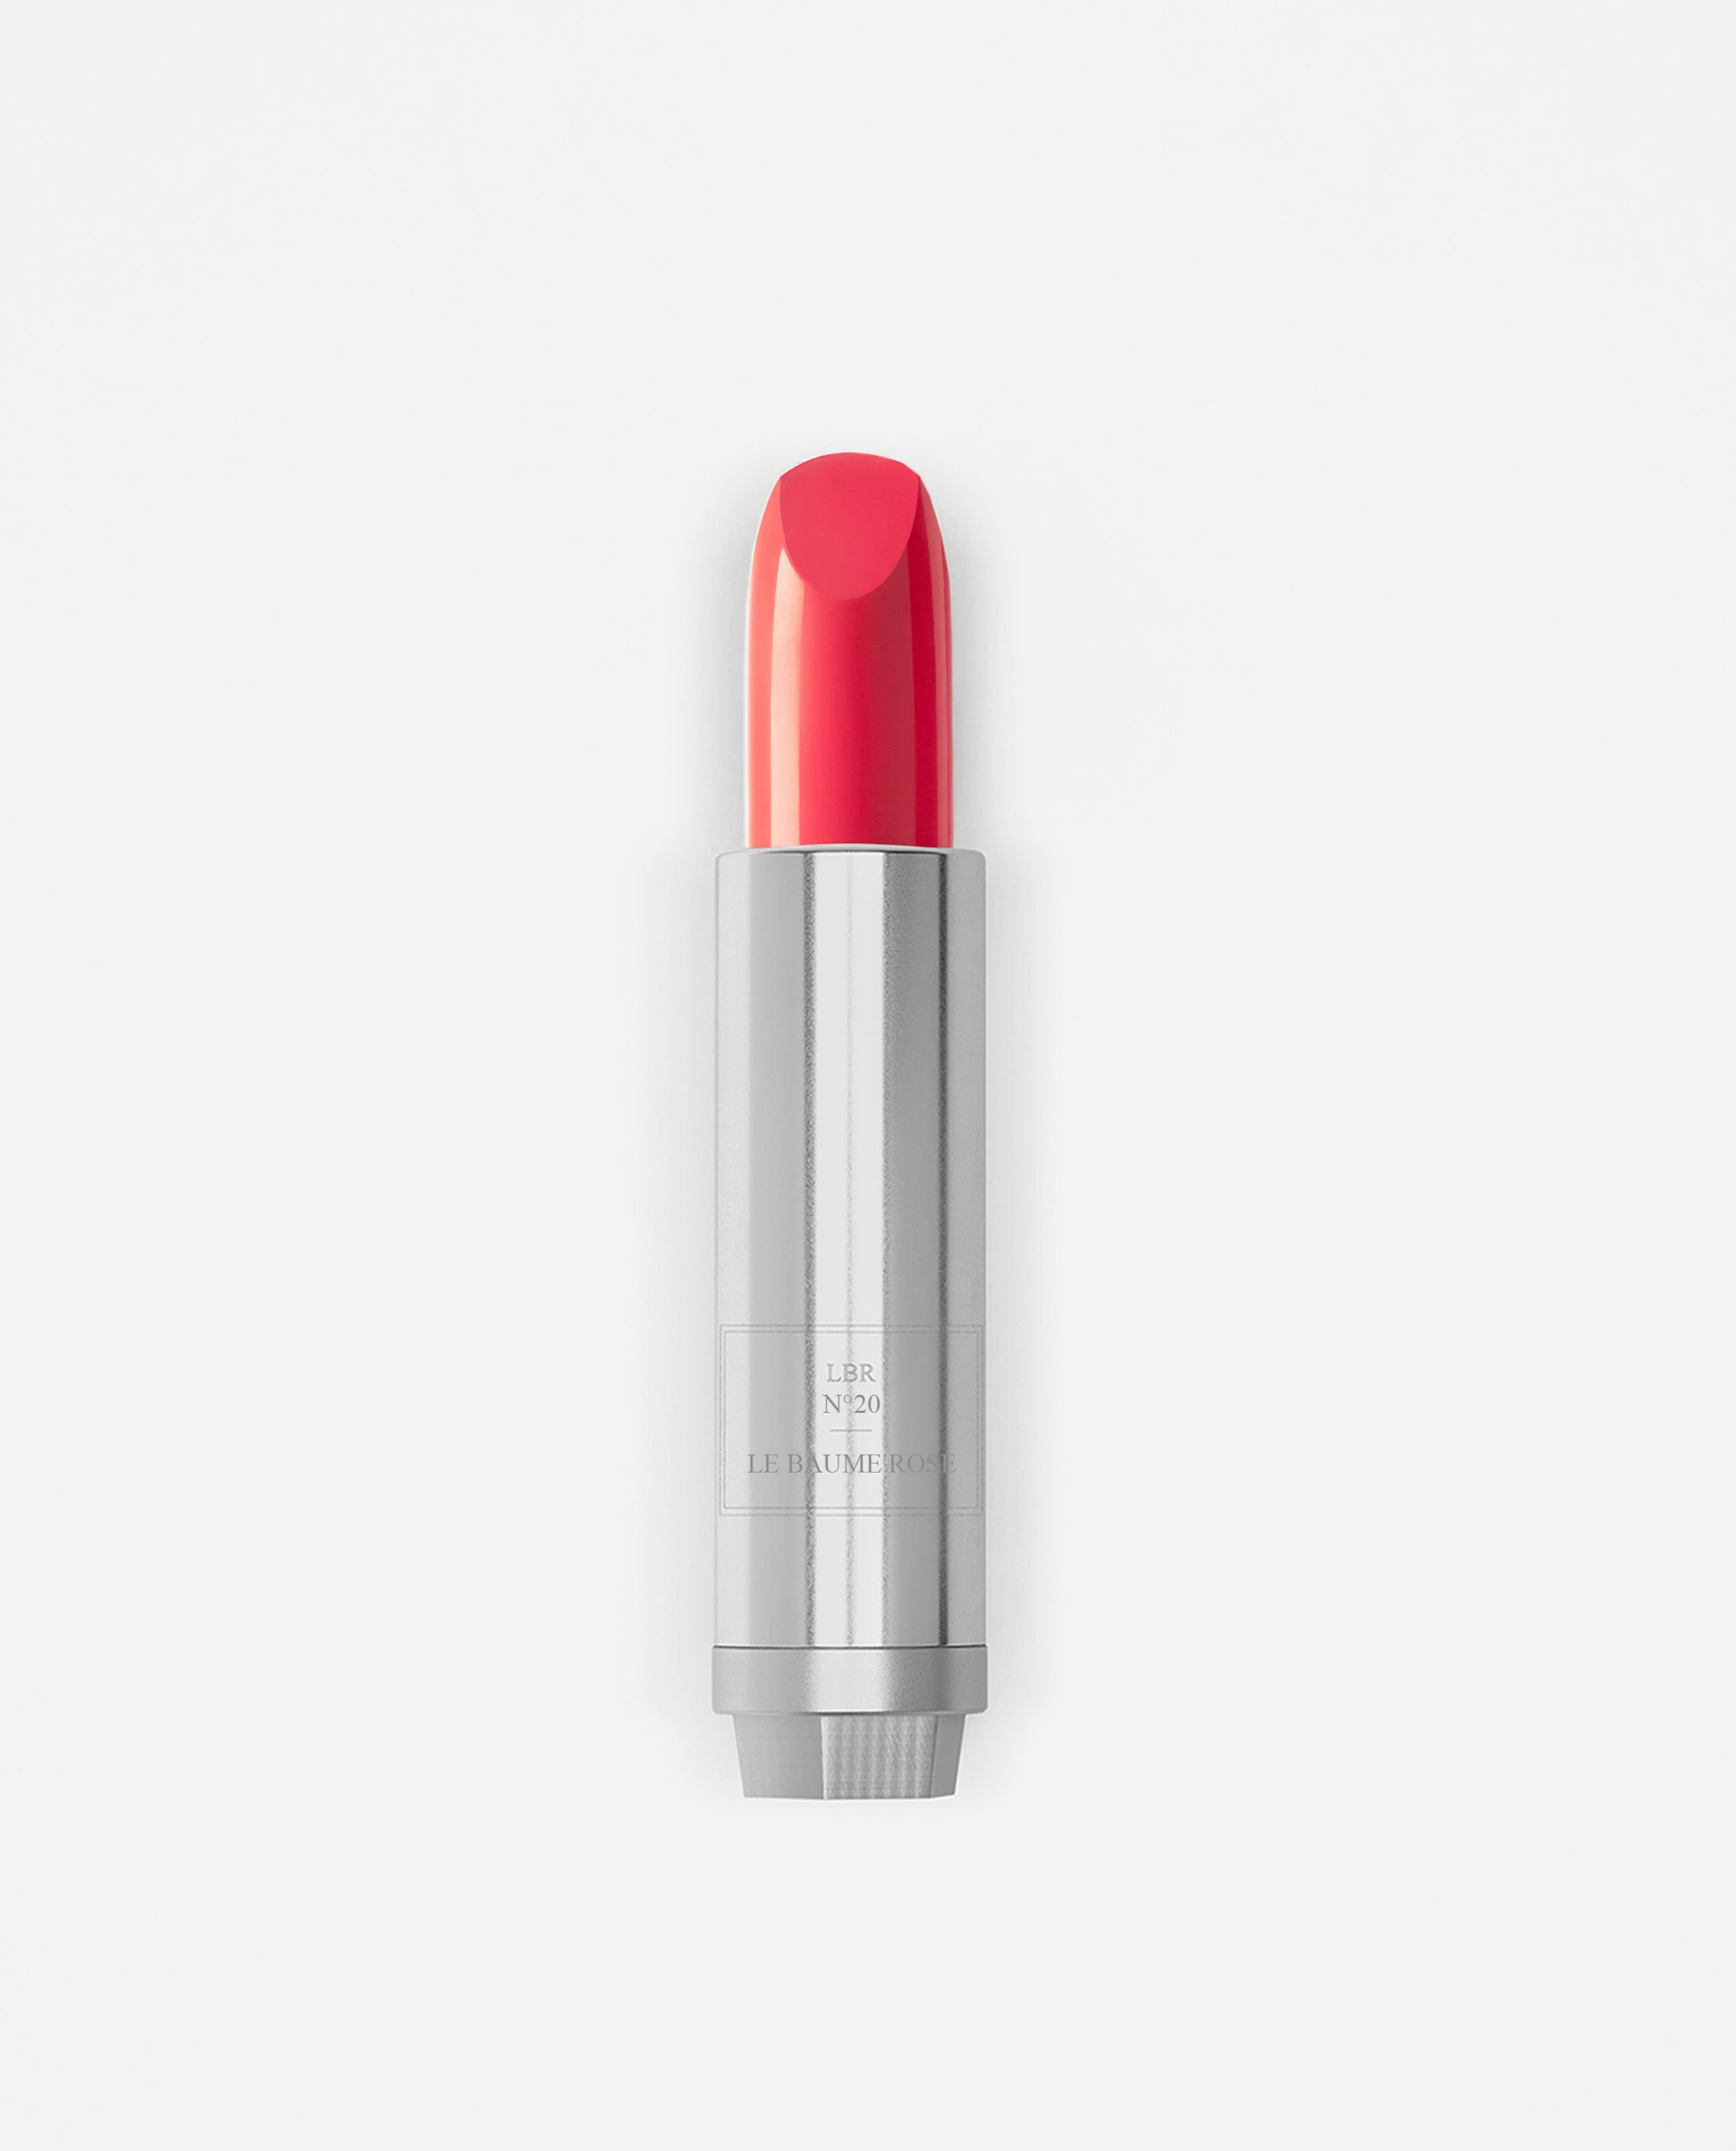 La bouche rouge Pink balm lipstick in metal refill